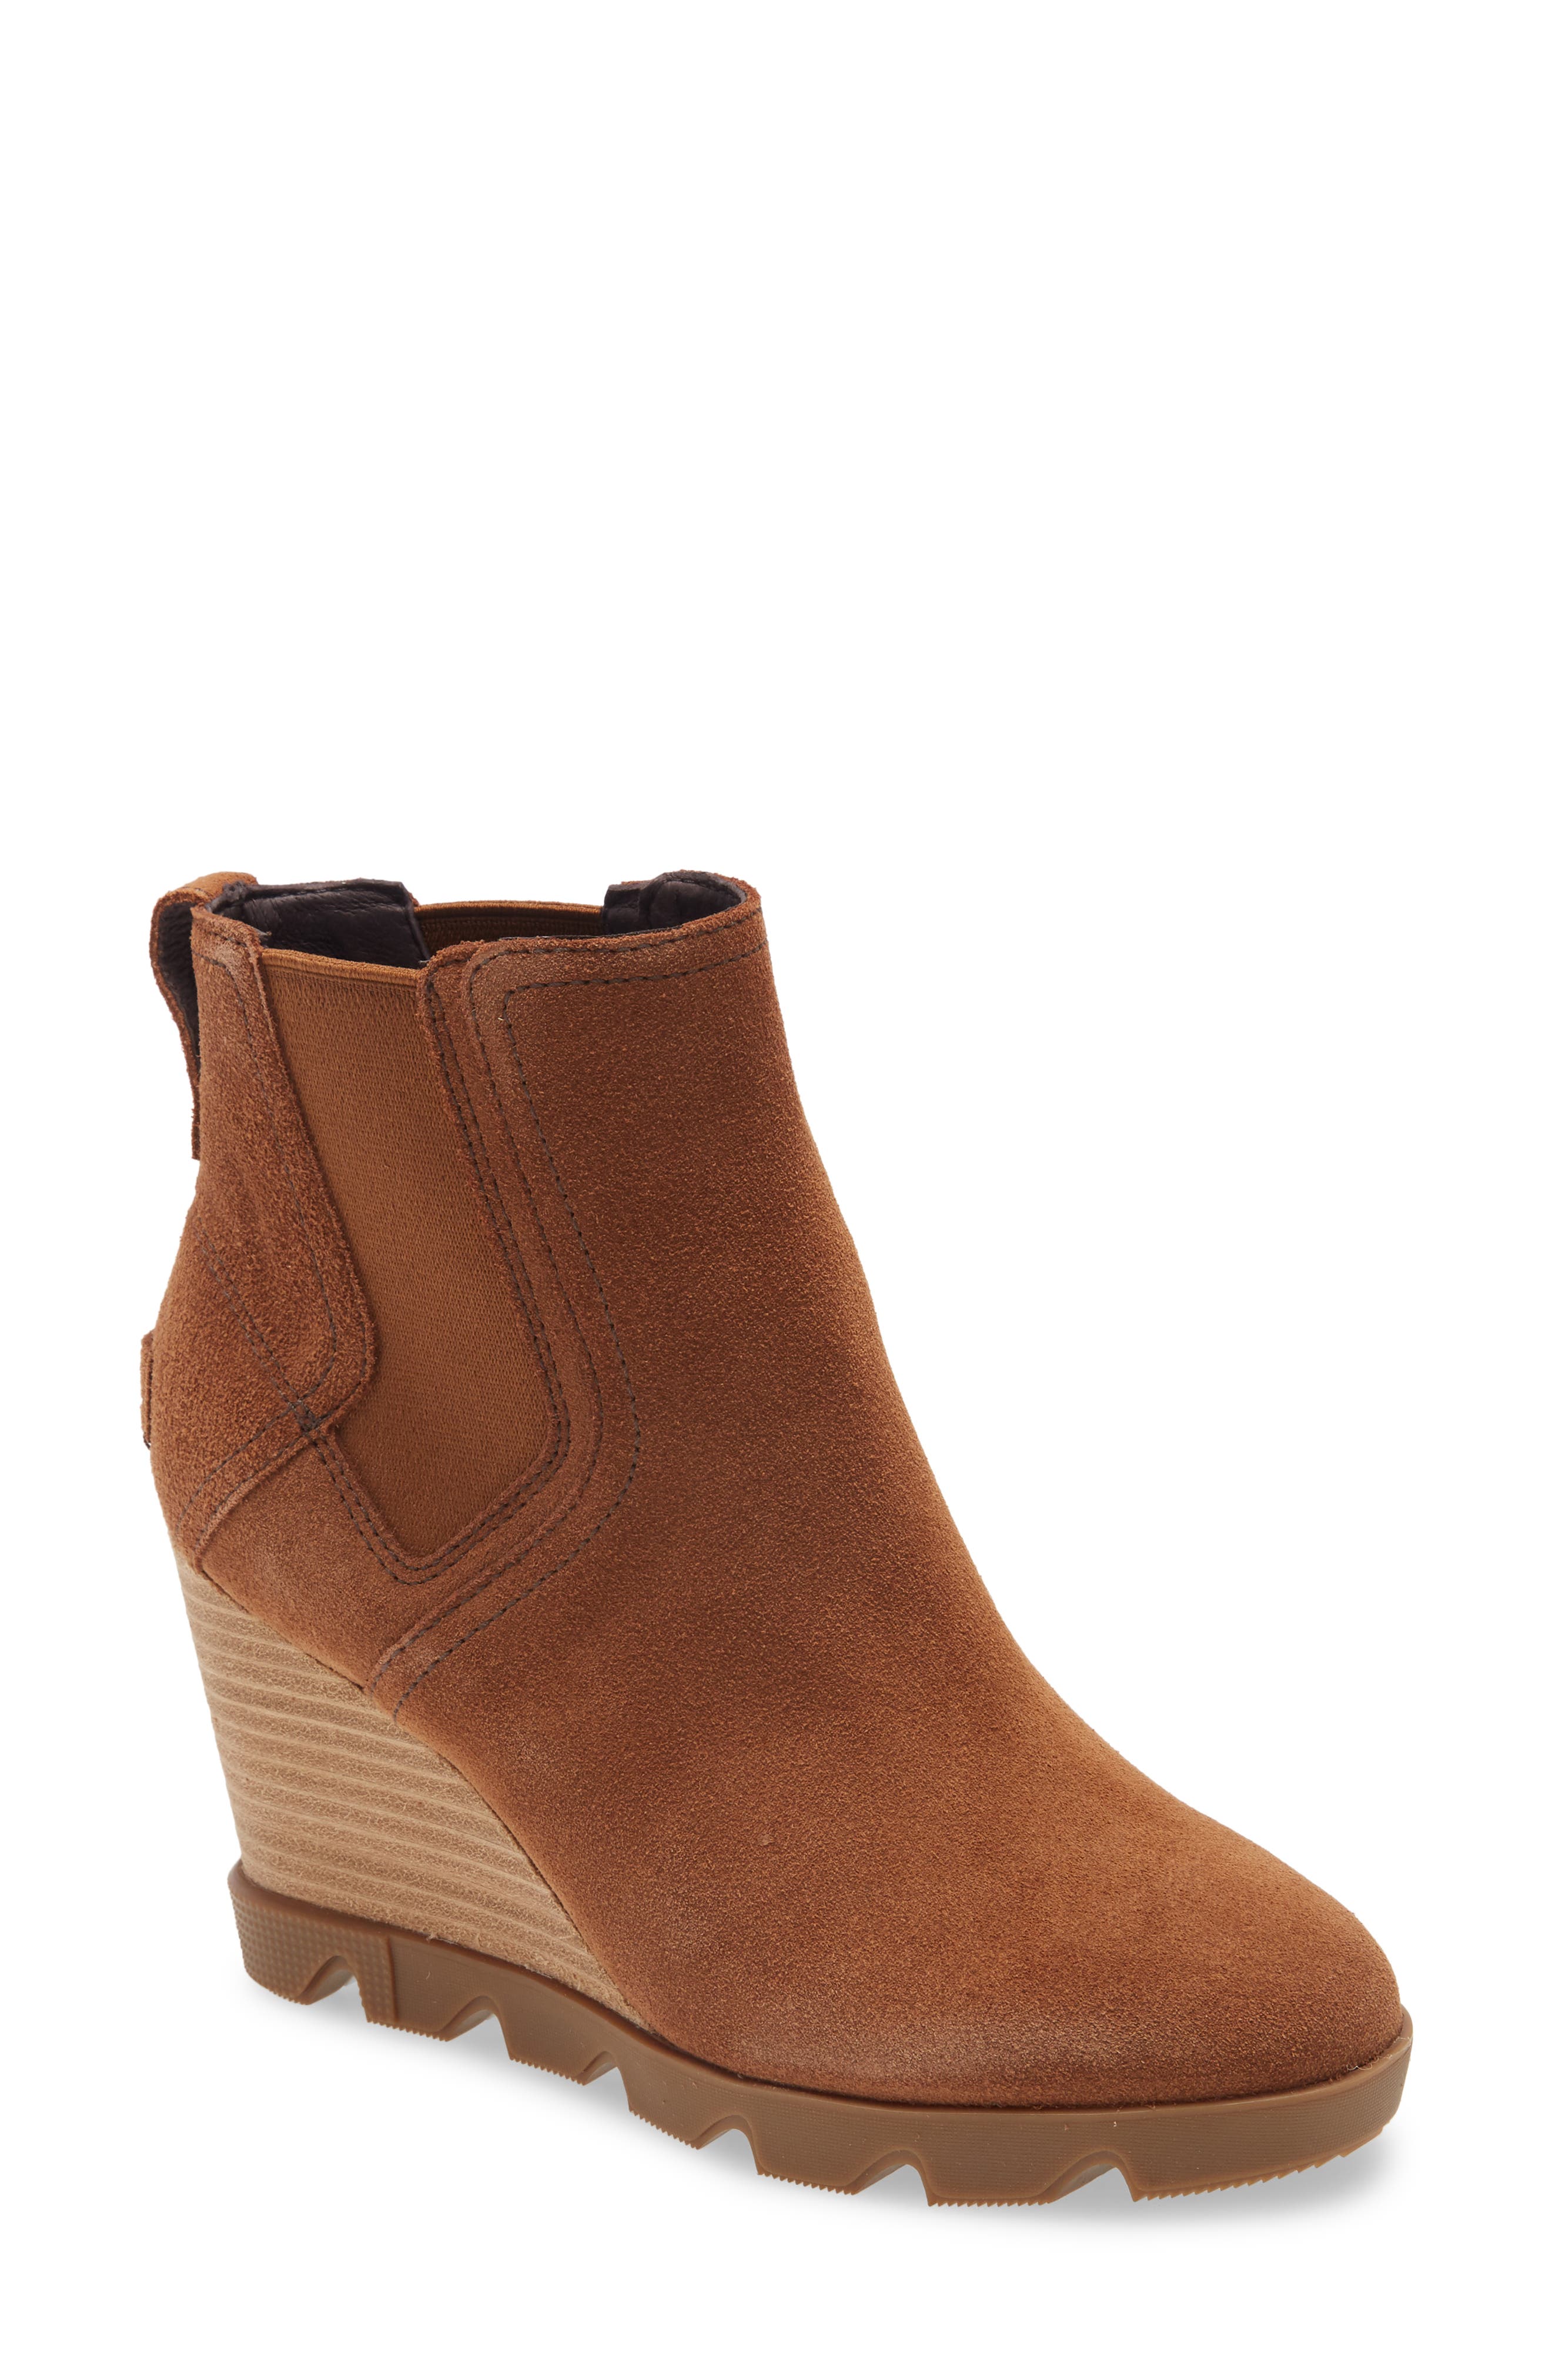 women's wedge mid waterproof leather boots